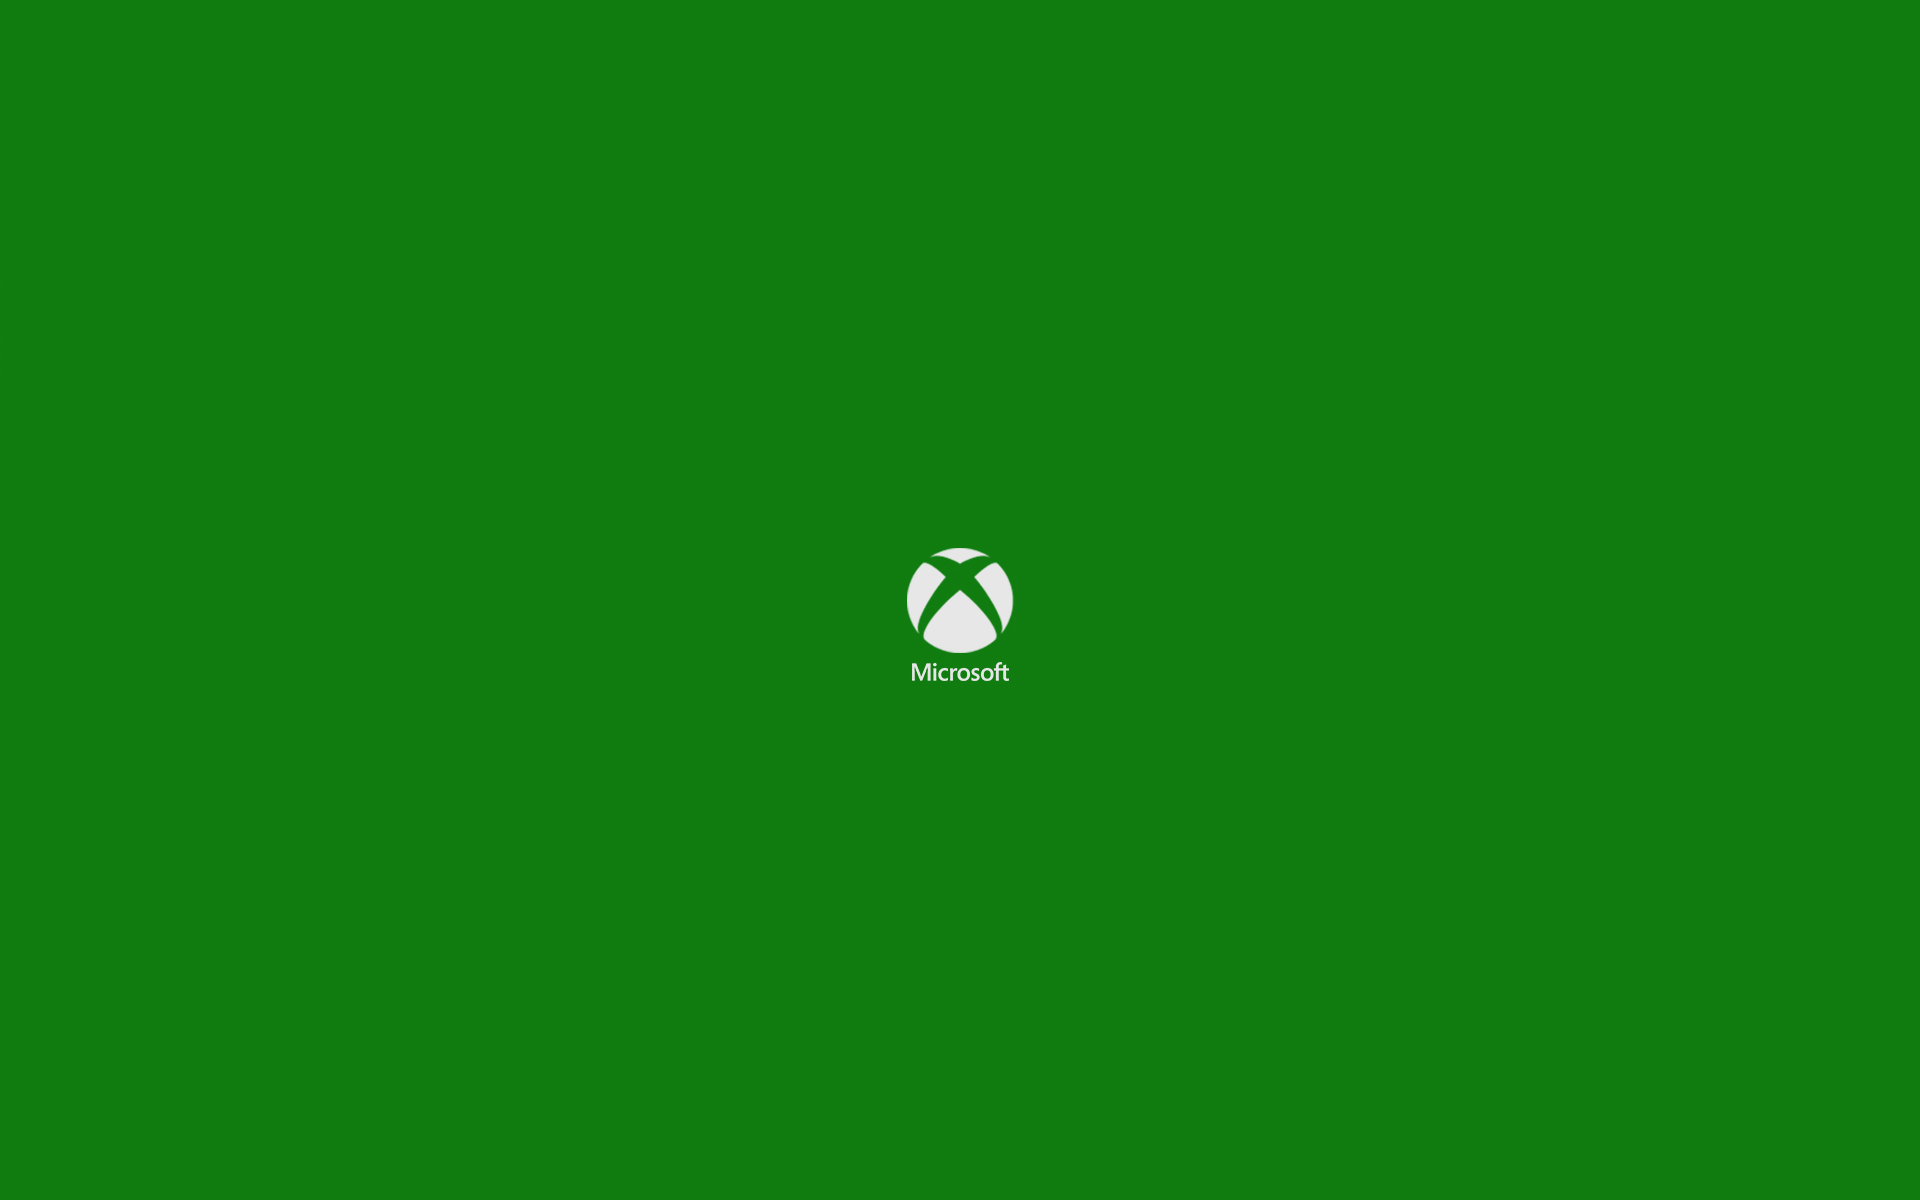 Xbox Logo Wallpaper On